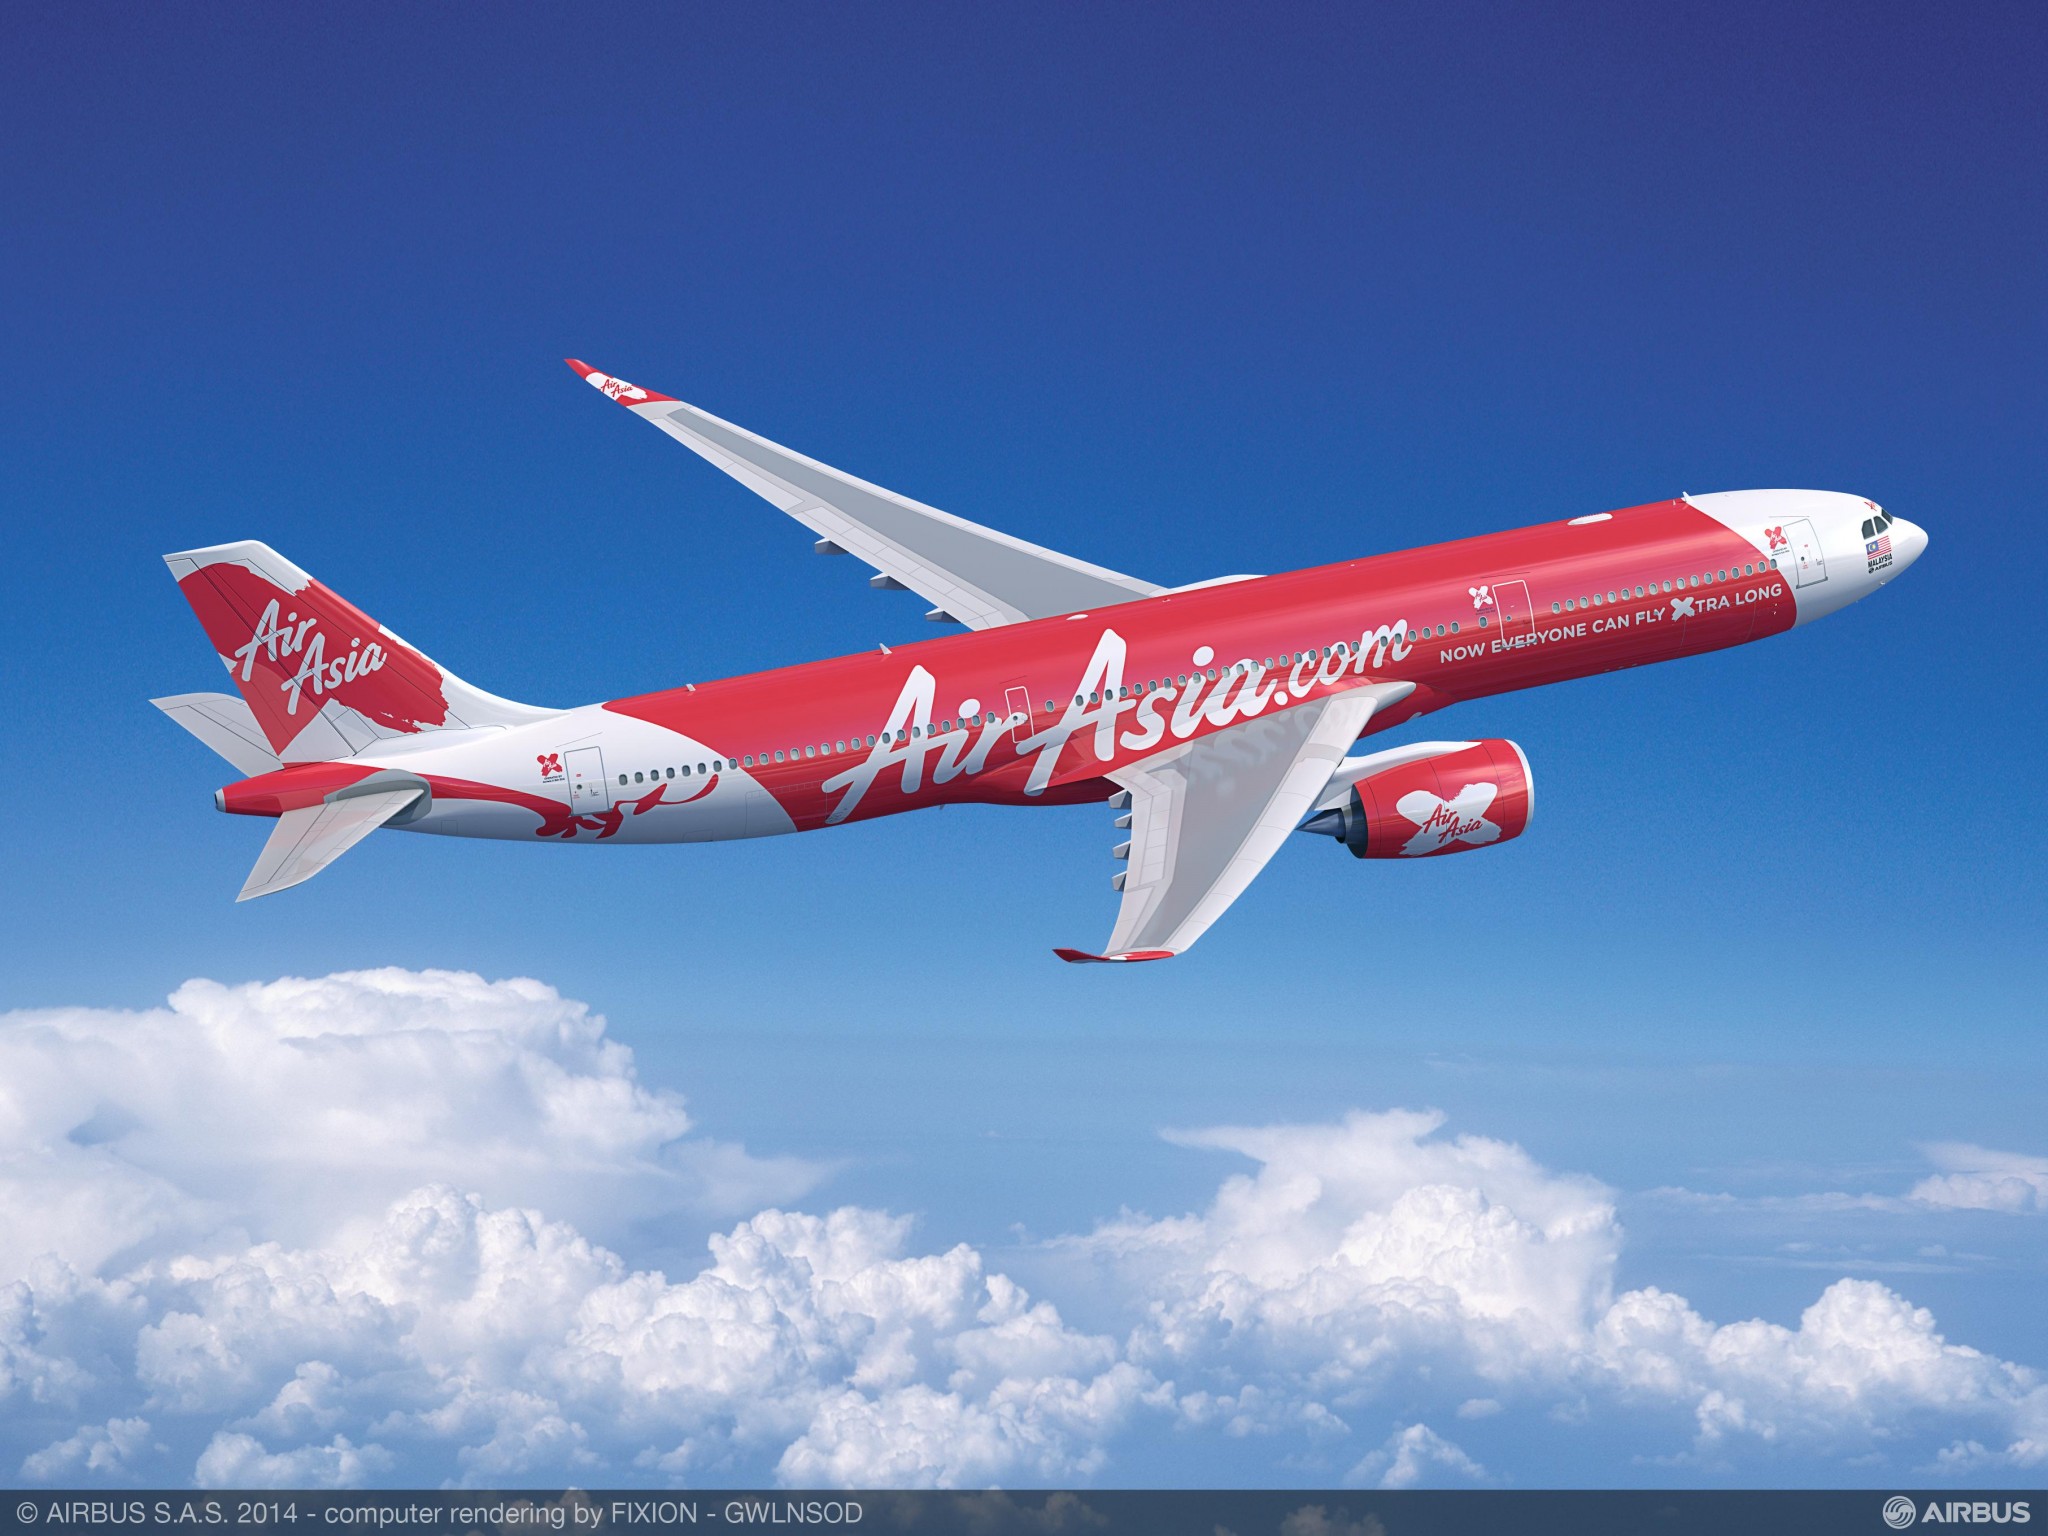 AirAsia X runs out of money, says deputy chair